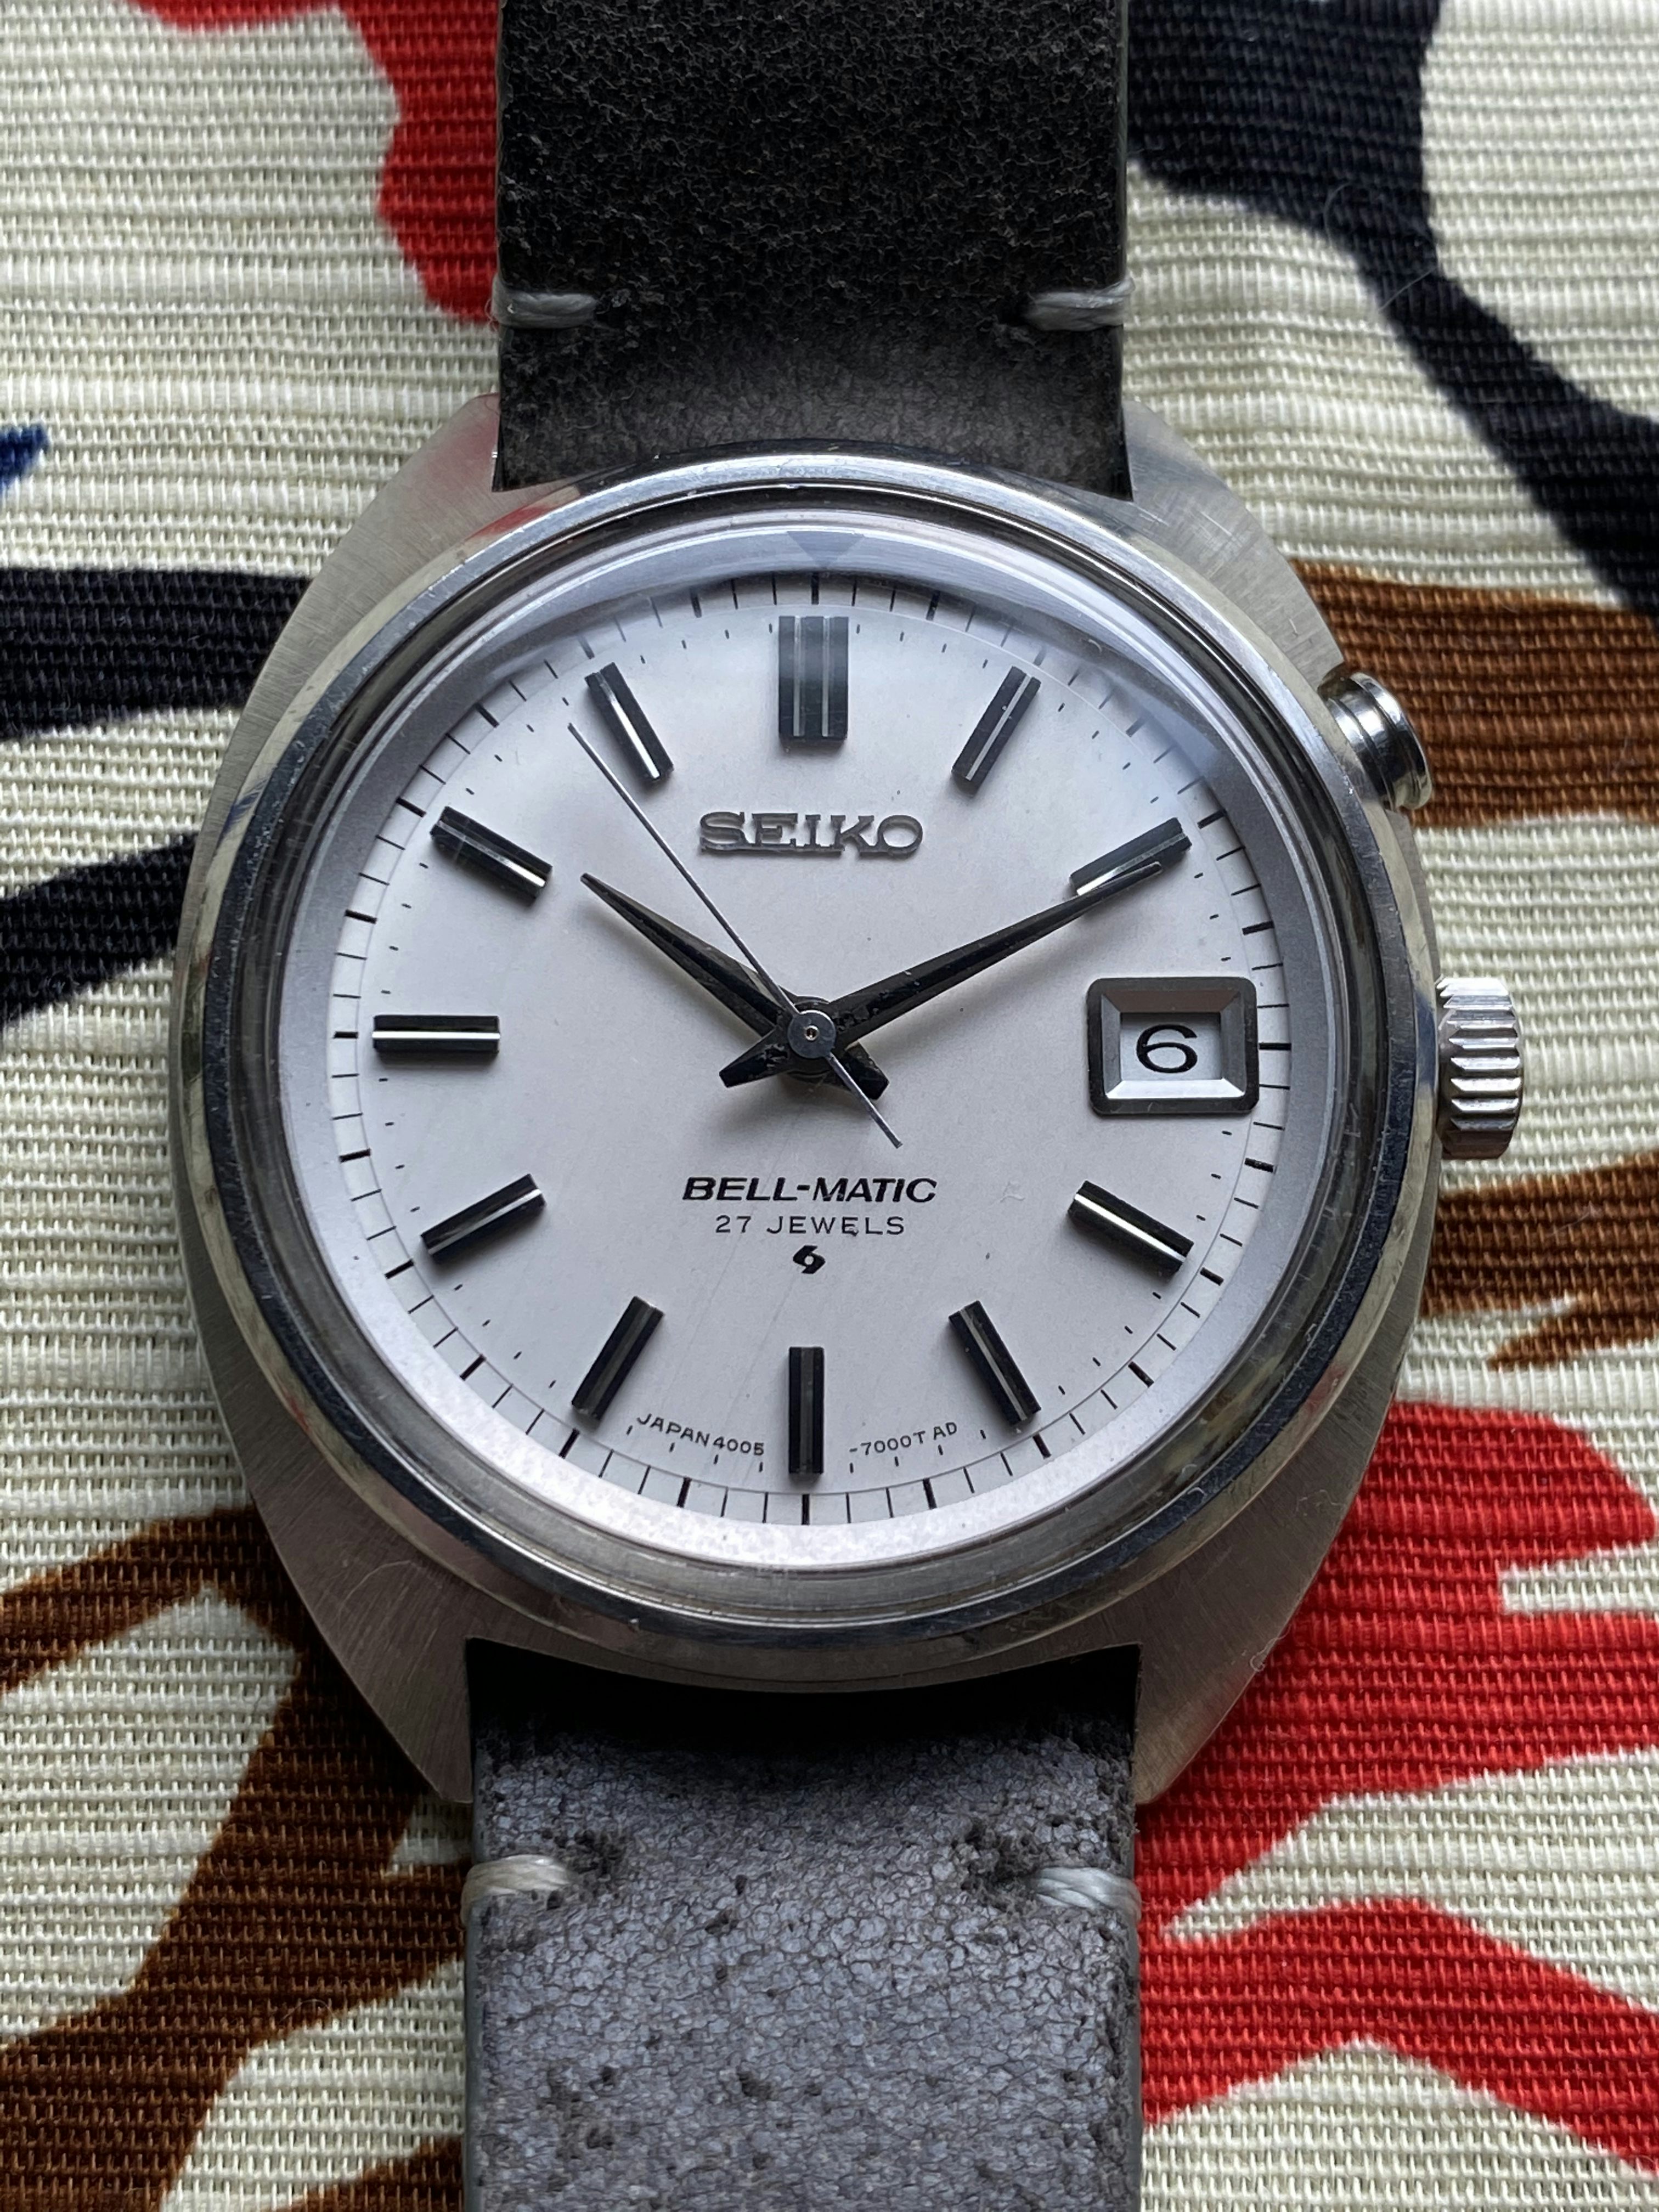 1968 Seiko Bell-Matic 4005-7000 — Hodinkee Community